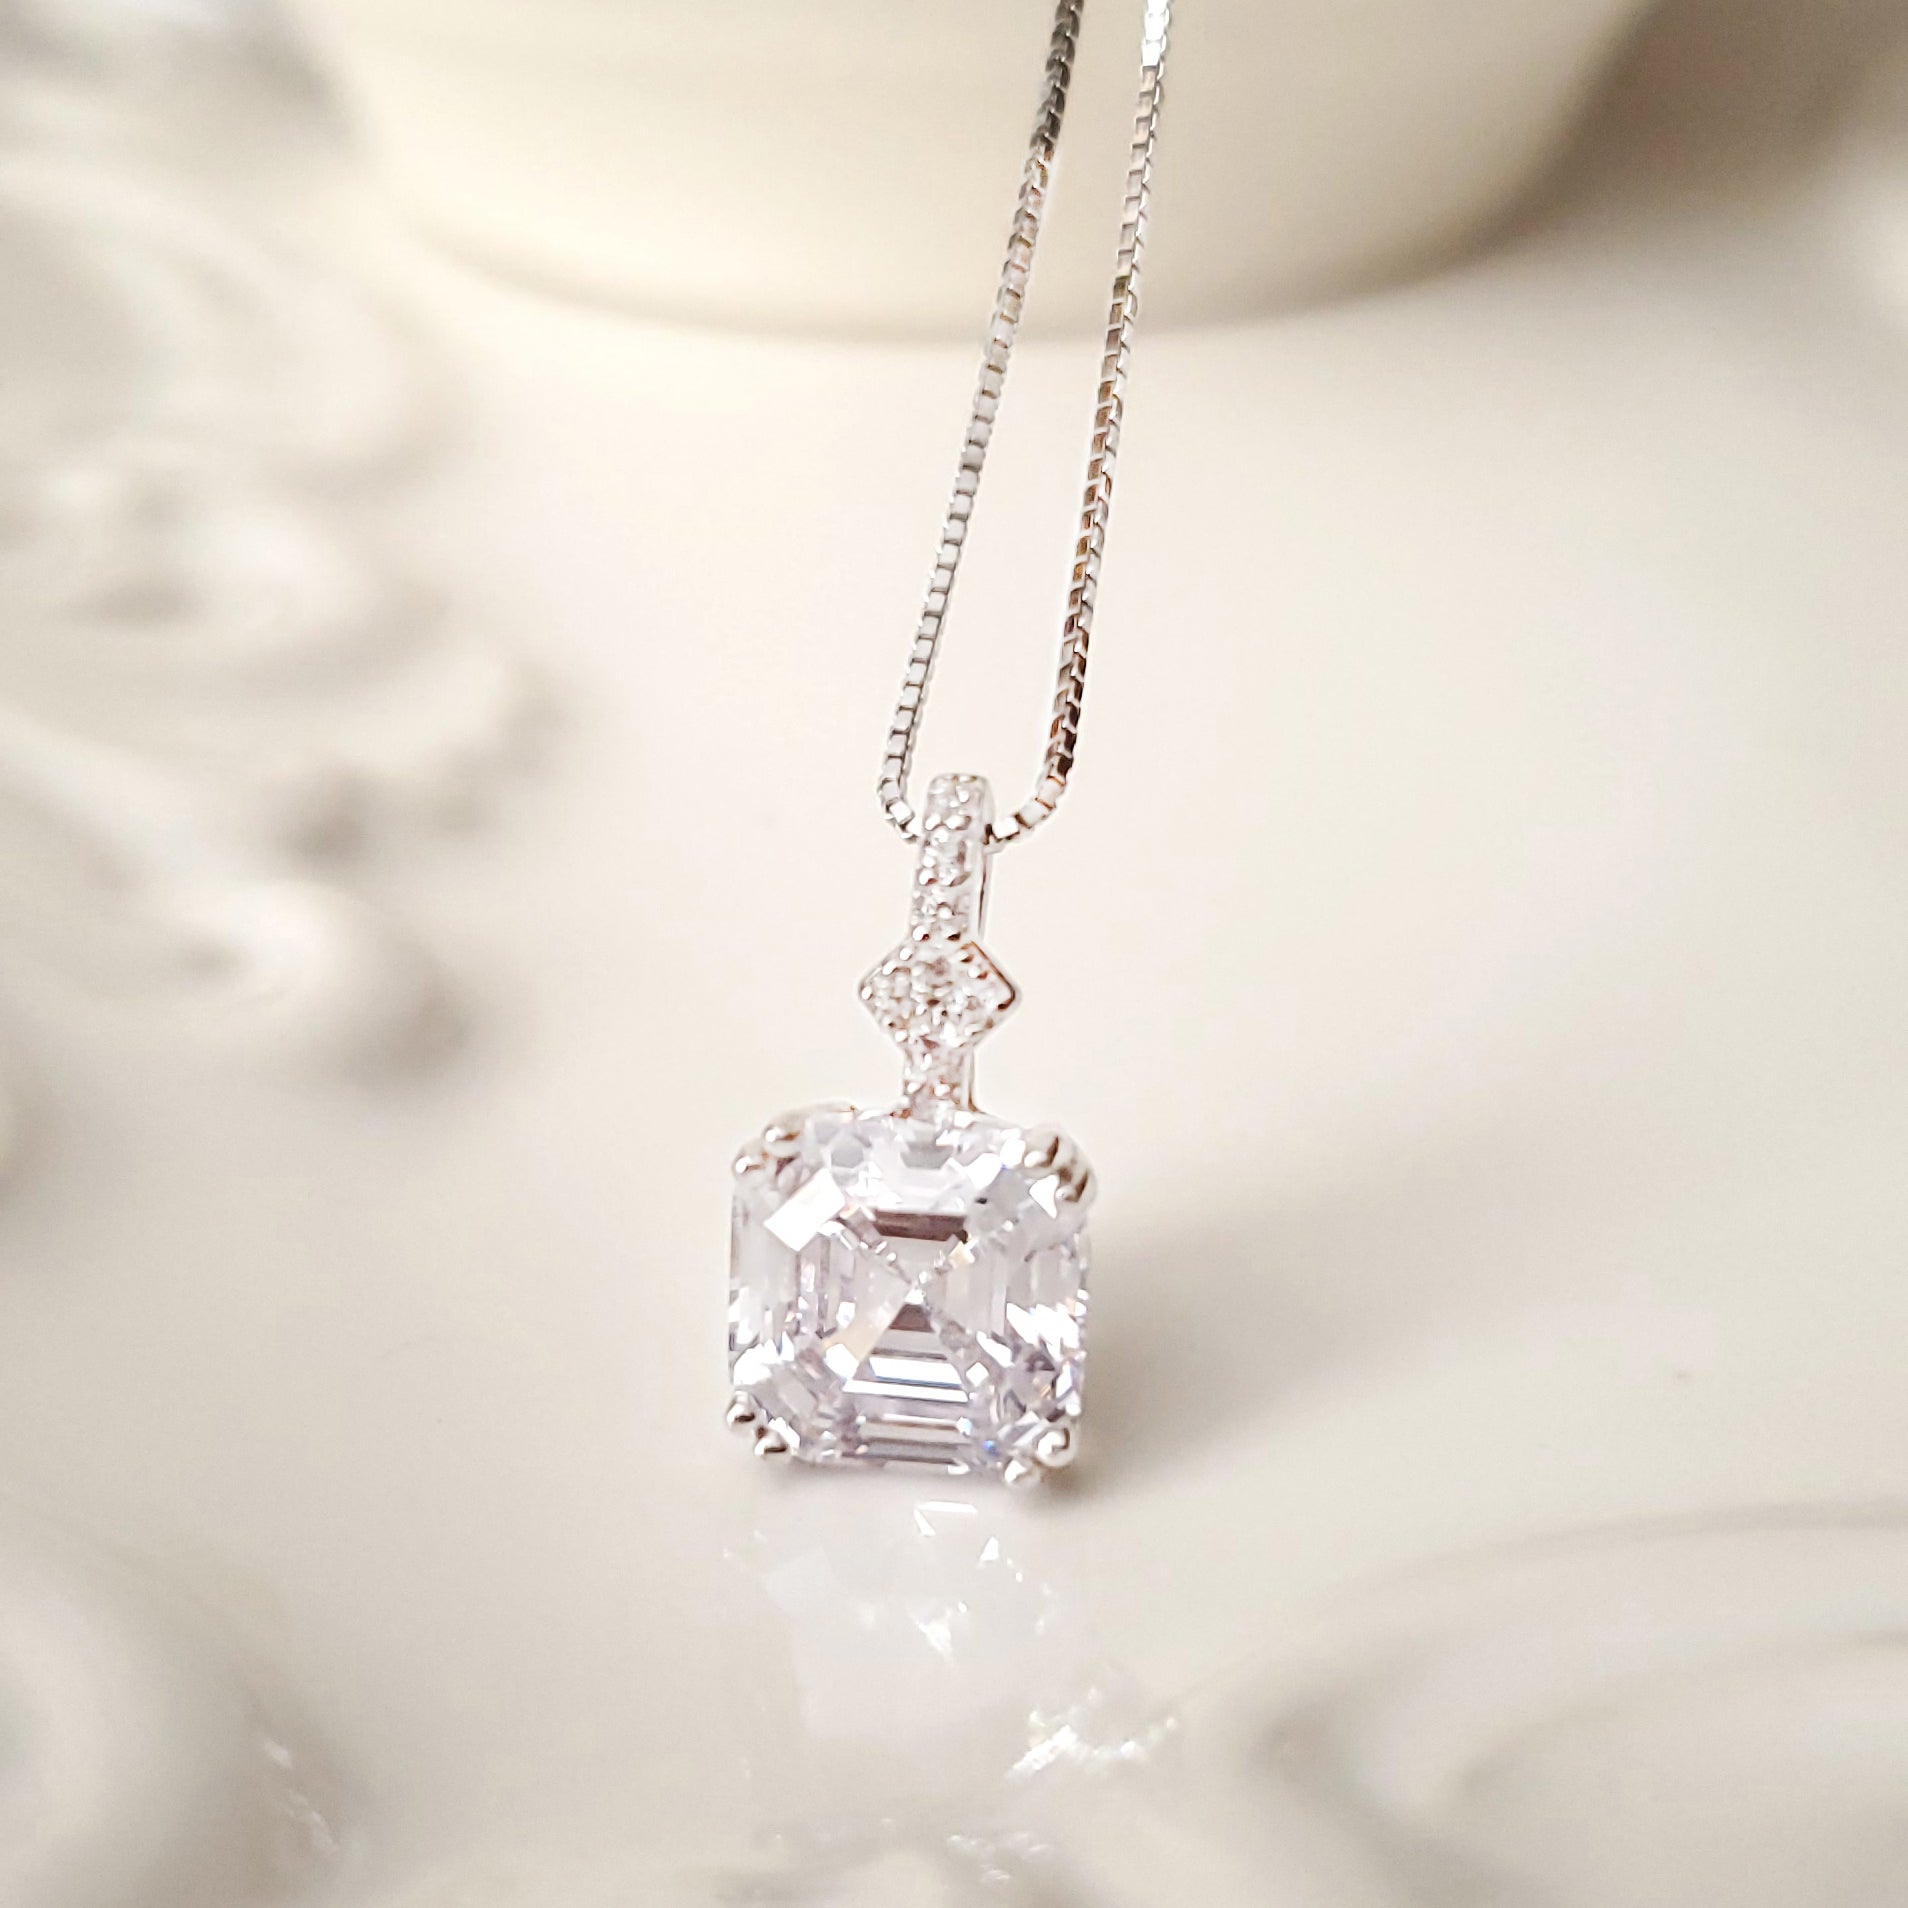 Asscher Cut Lustrous Clear Morganite Gemstone Necklace for Women's